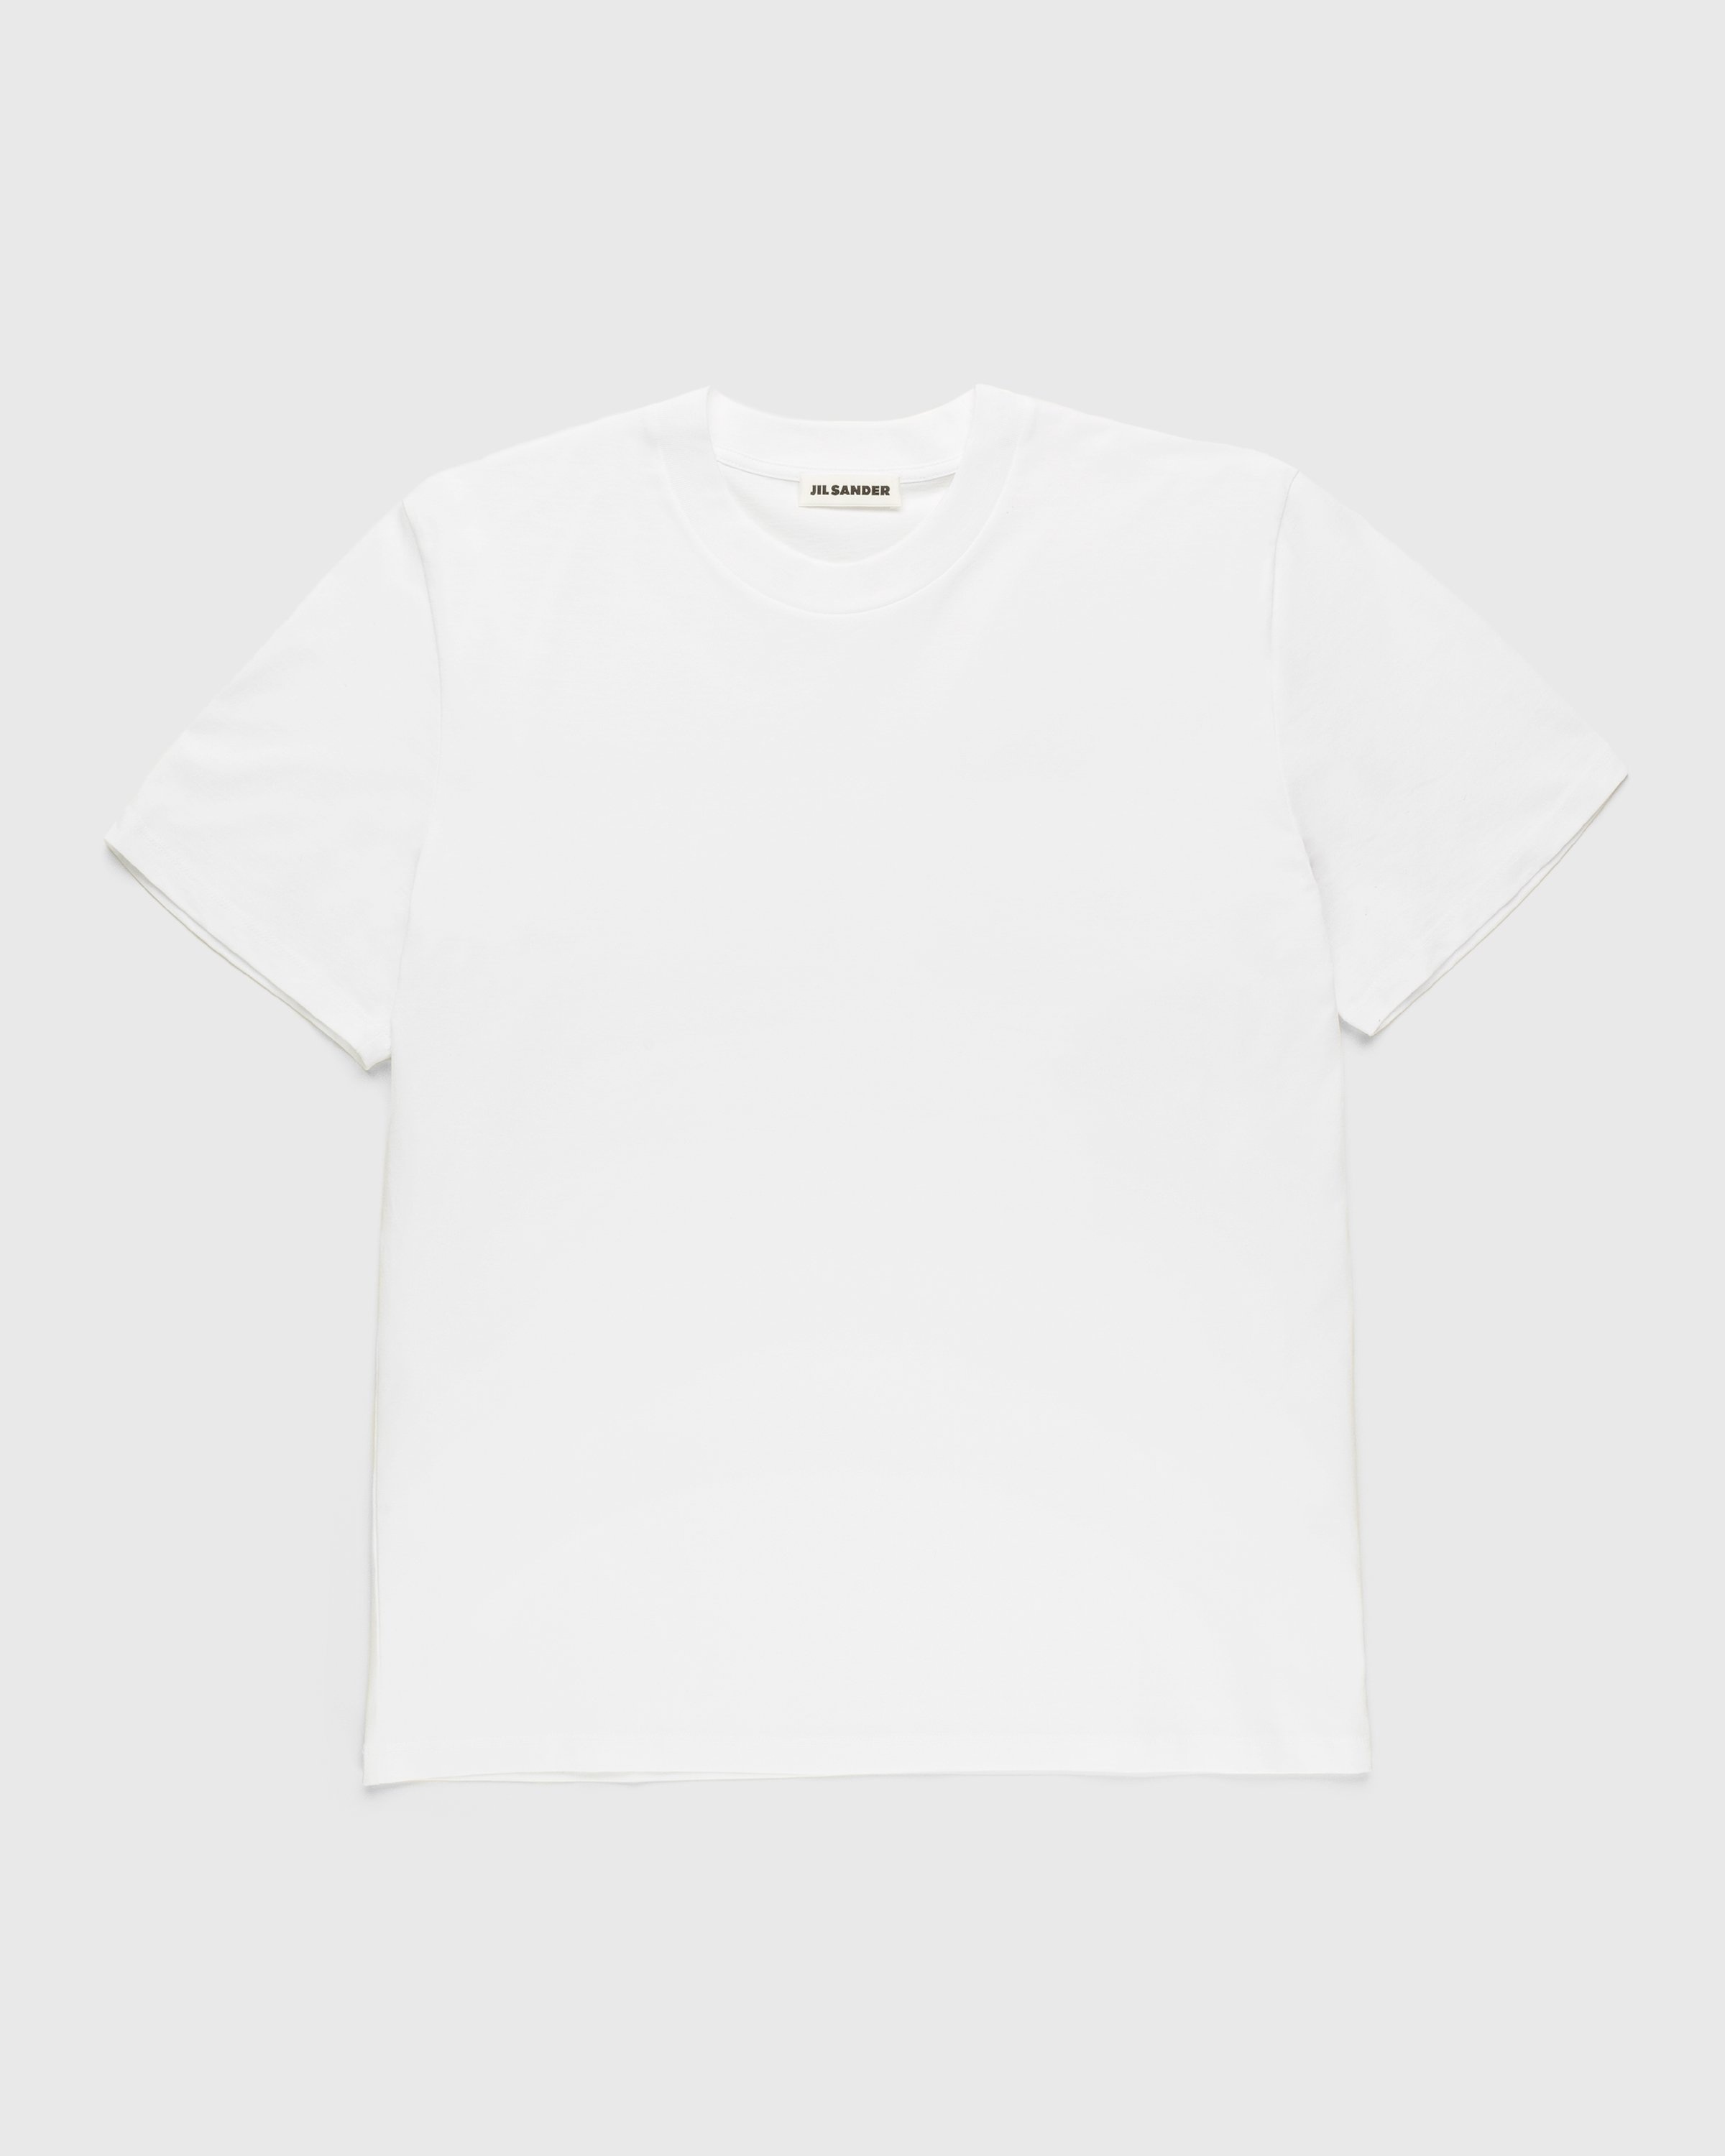 Jil Sander – Solid Cotton T-Shirt White - Tops - White - Image 1